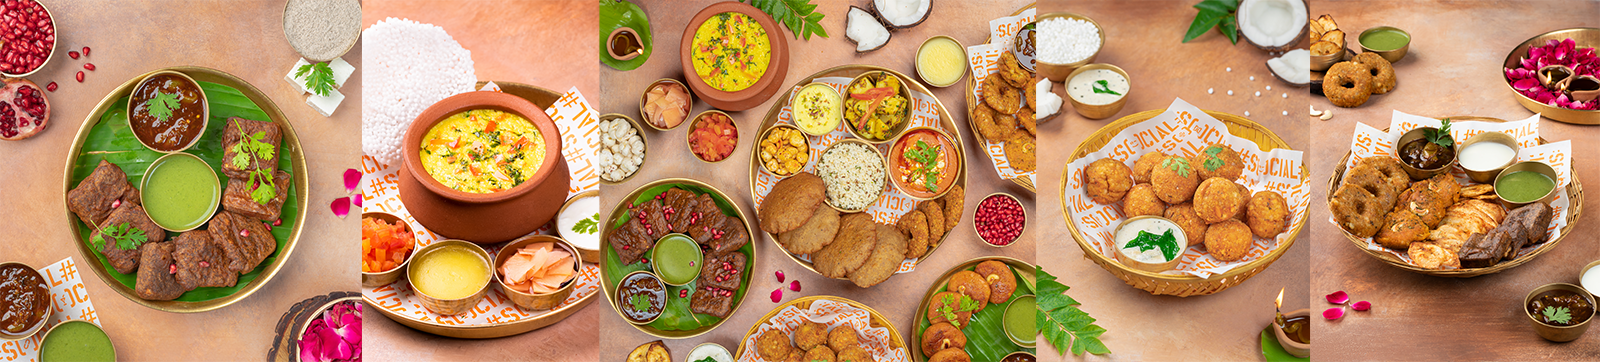 Navratri Special: Sattvik Feast on Fasting Days at Social